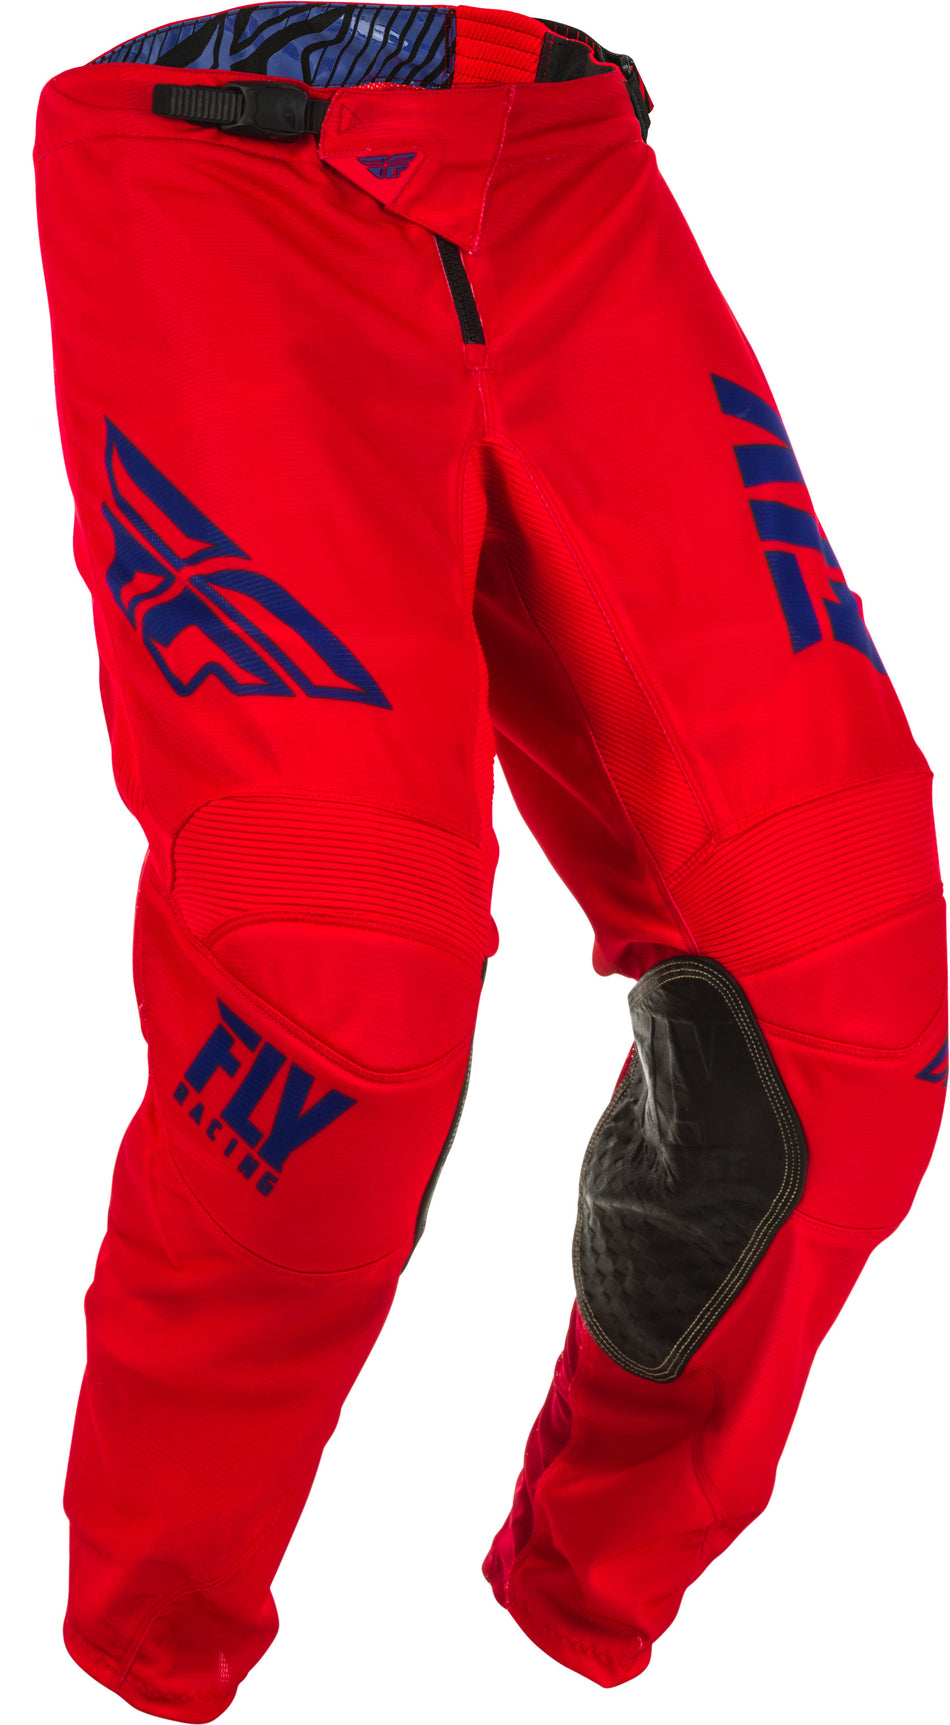 FLY RACING Kinetic Mesh Shield Pants Red/Blue Sz 26 373-32226